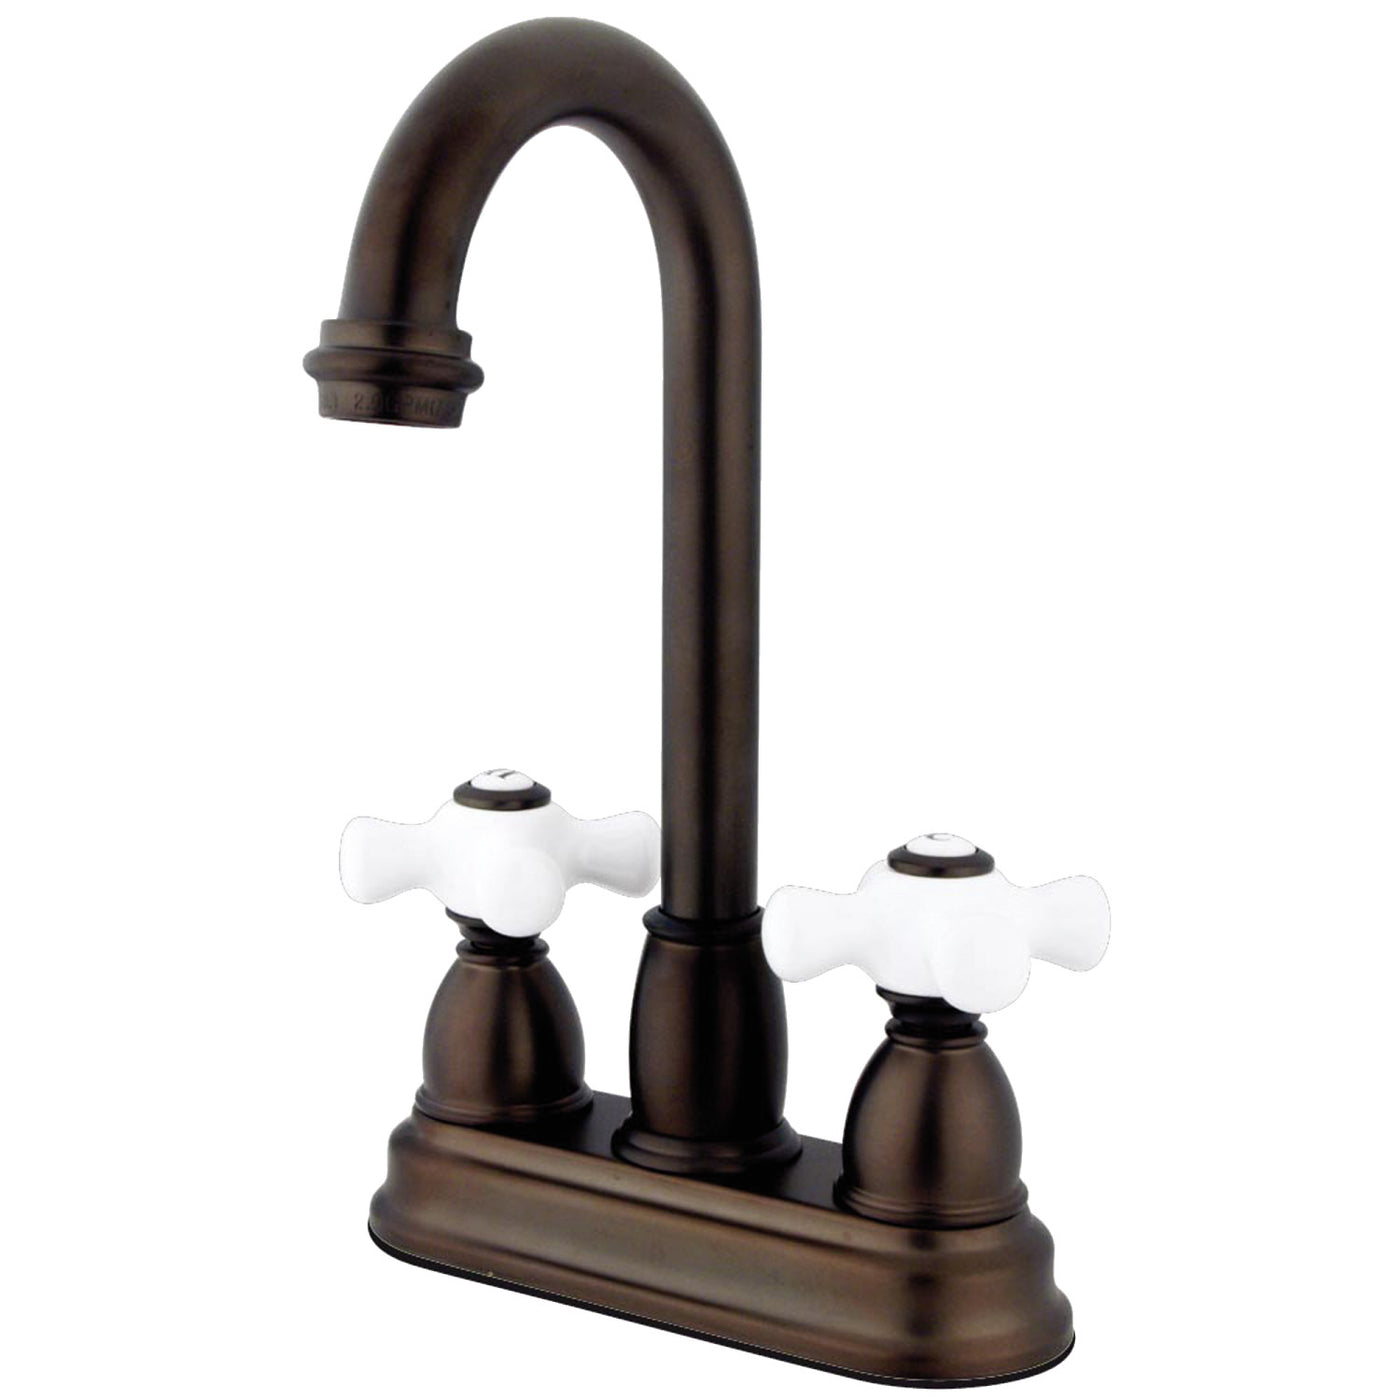 Elements of Design EB3495PX 4-Inch Centerset Bar Faucet, Oil Rubbed Bronze